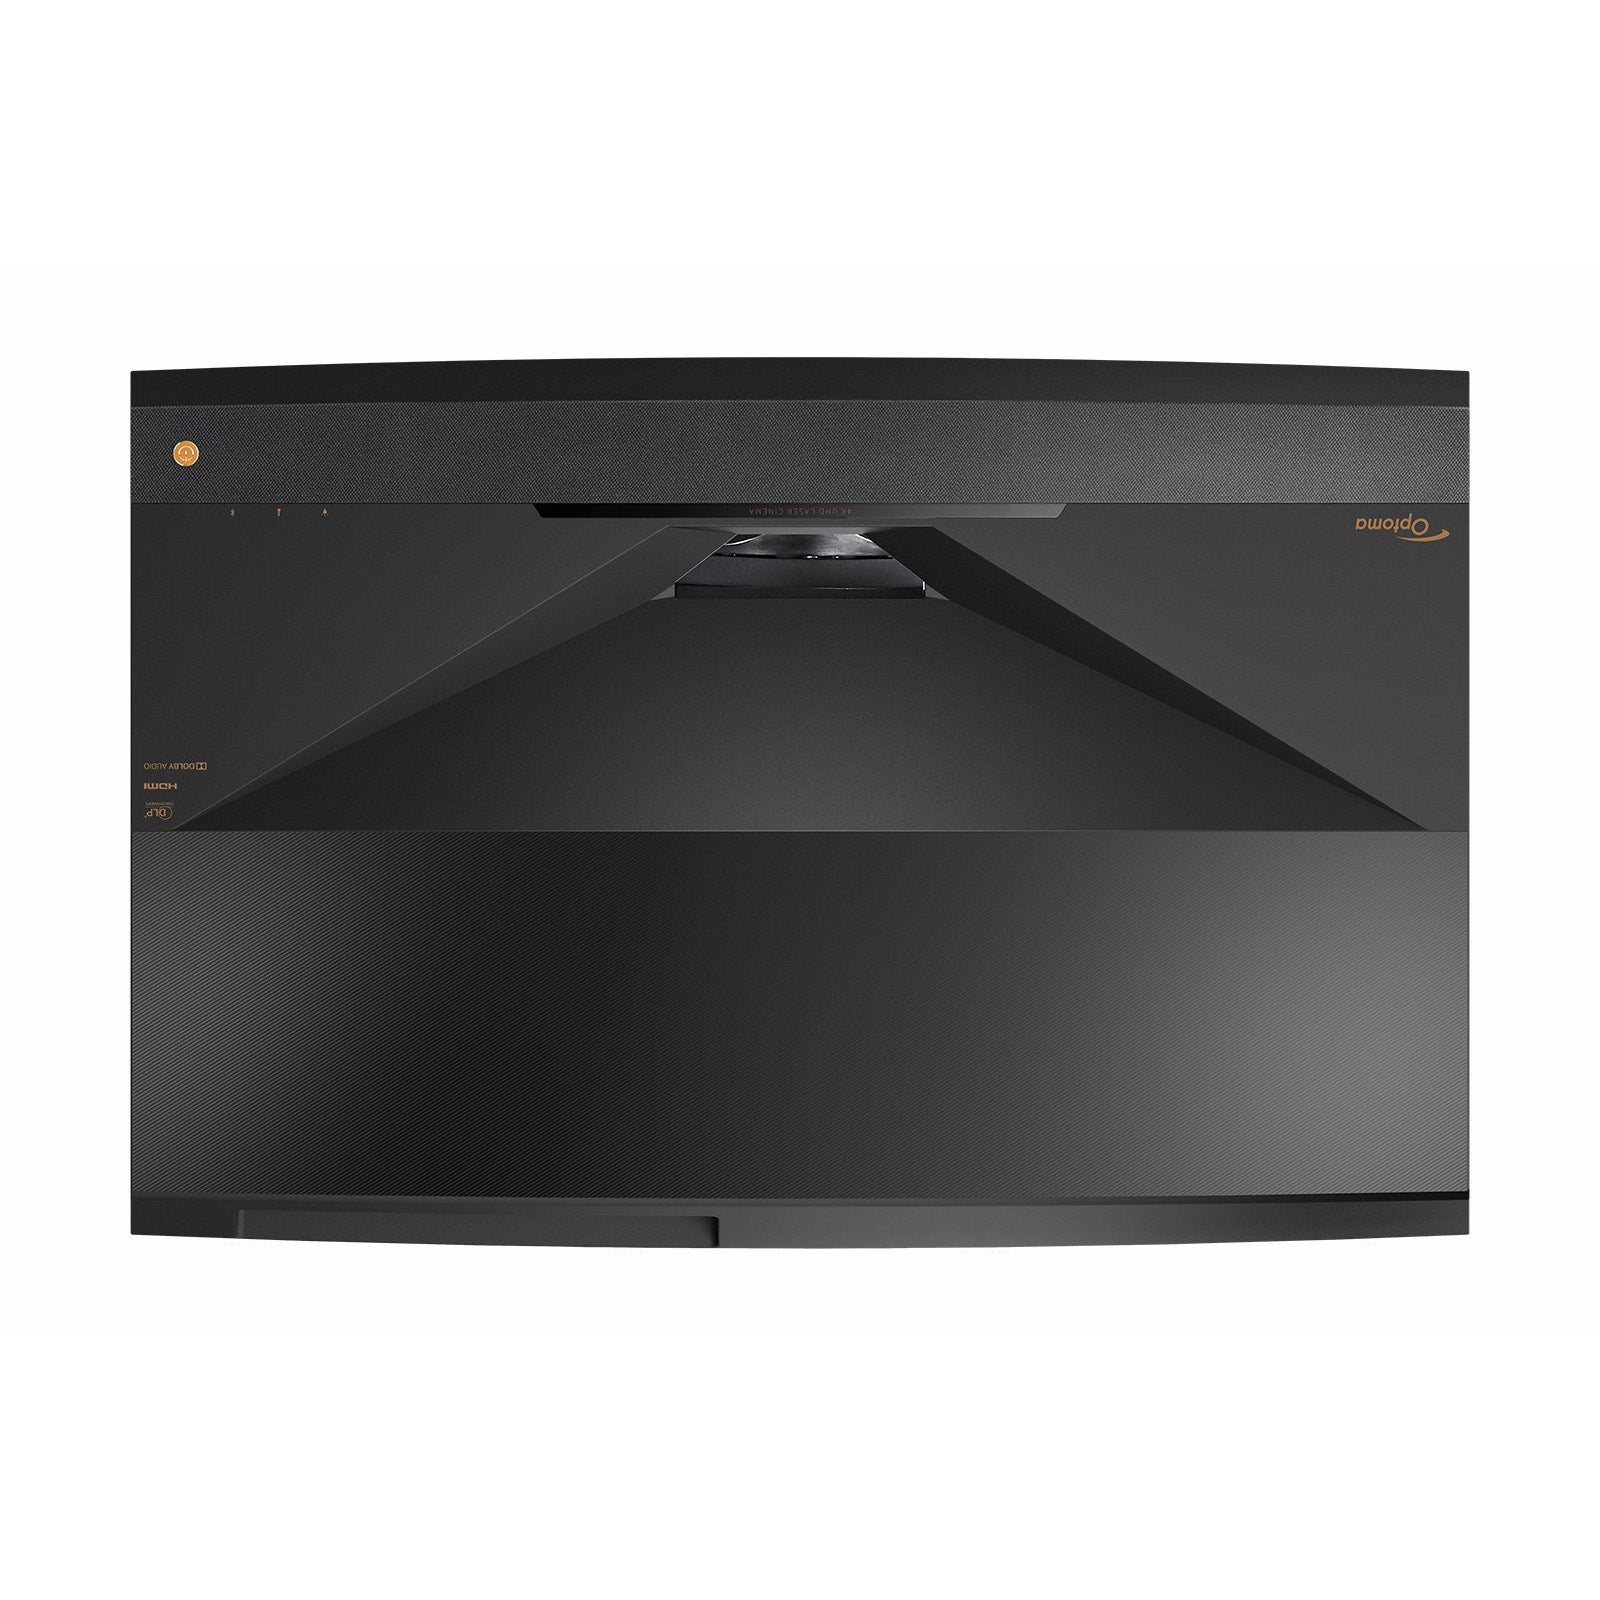 Optoma Cinema X Pro 4K LaserTV 投影電視